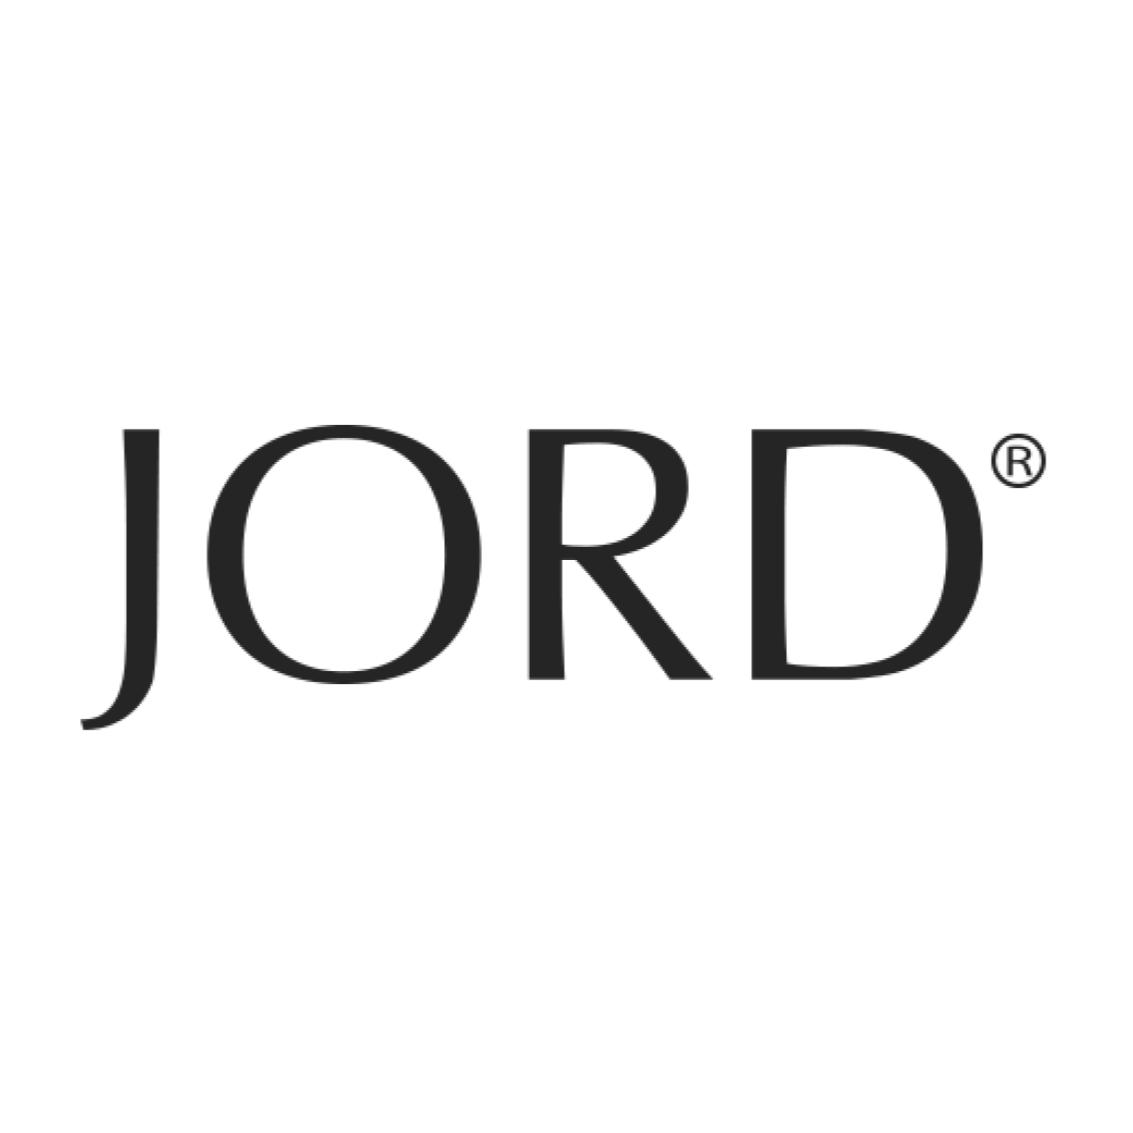 Jord innovator profile logo